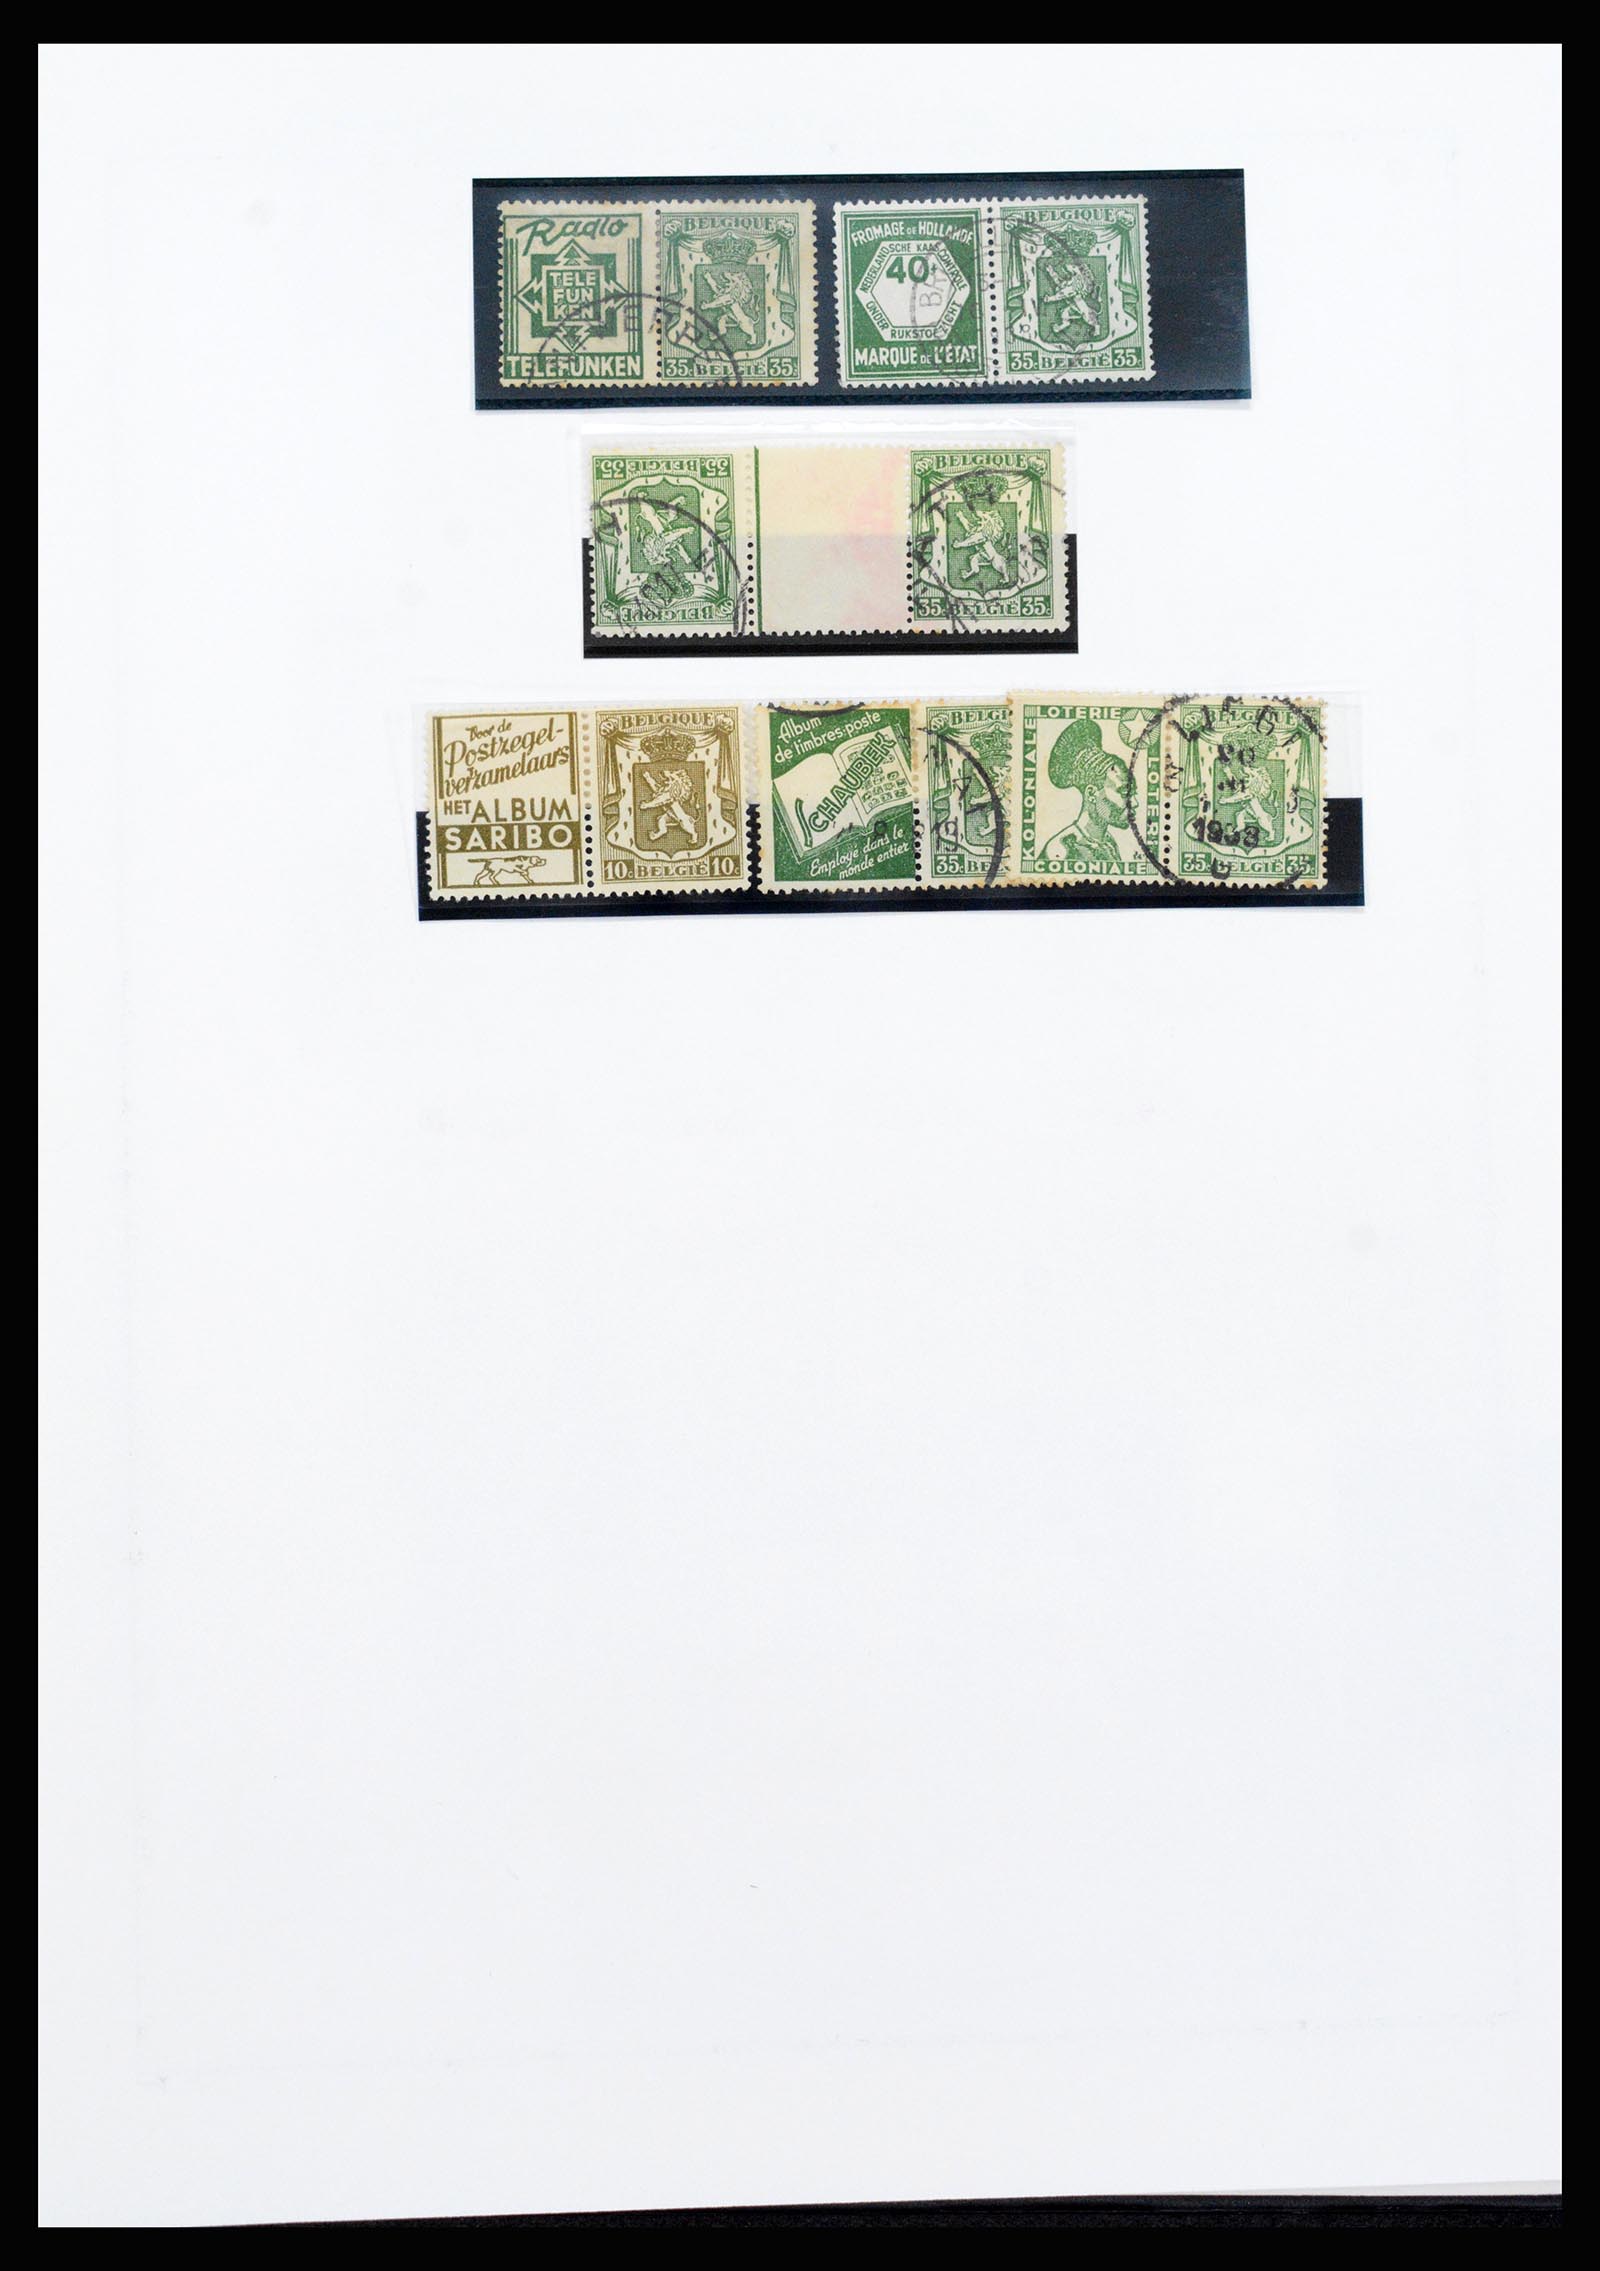 37240 024 - Stamp collection 37240 Belgium 1849-1996.